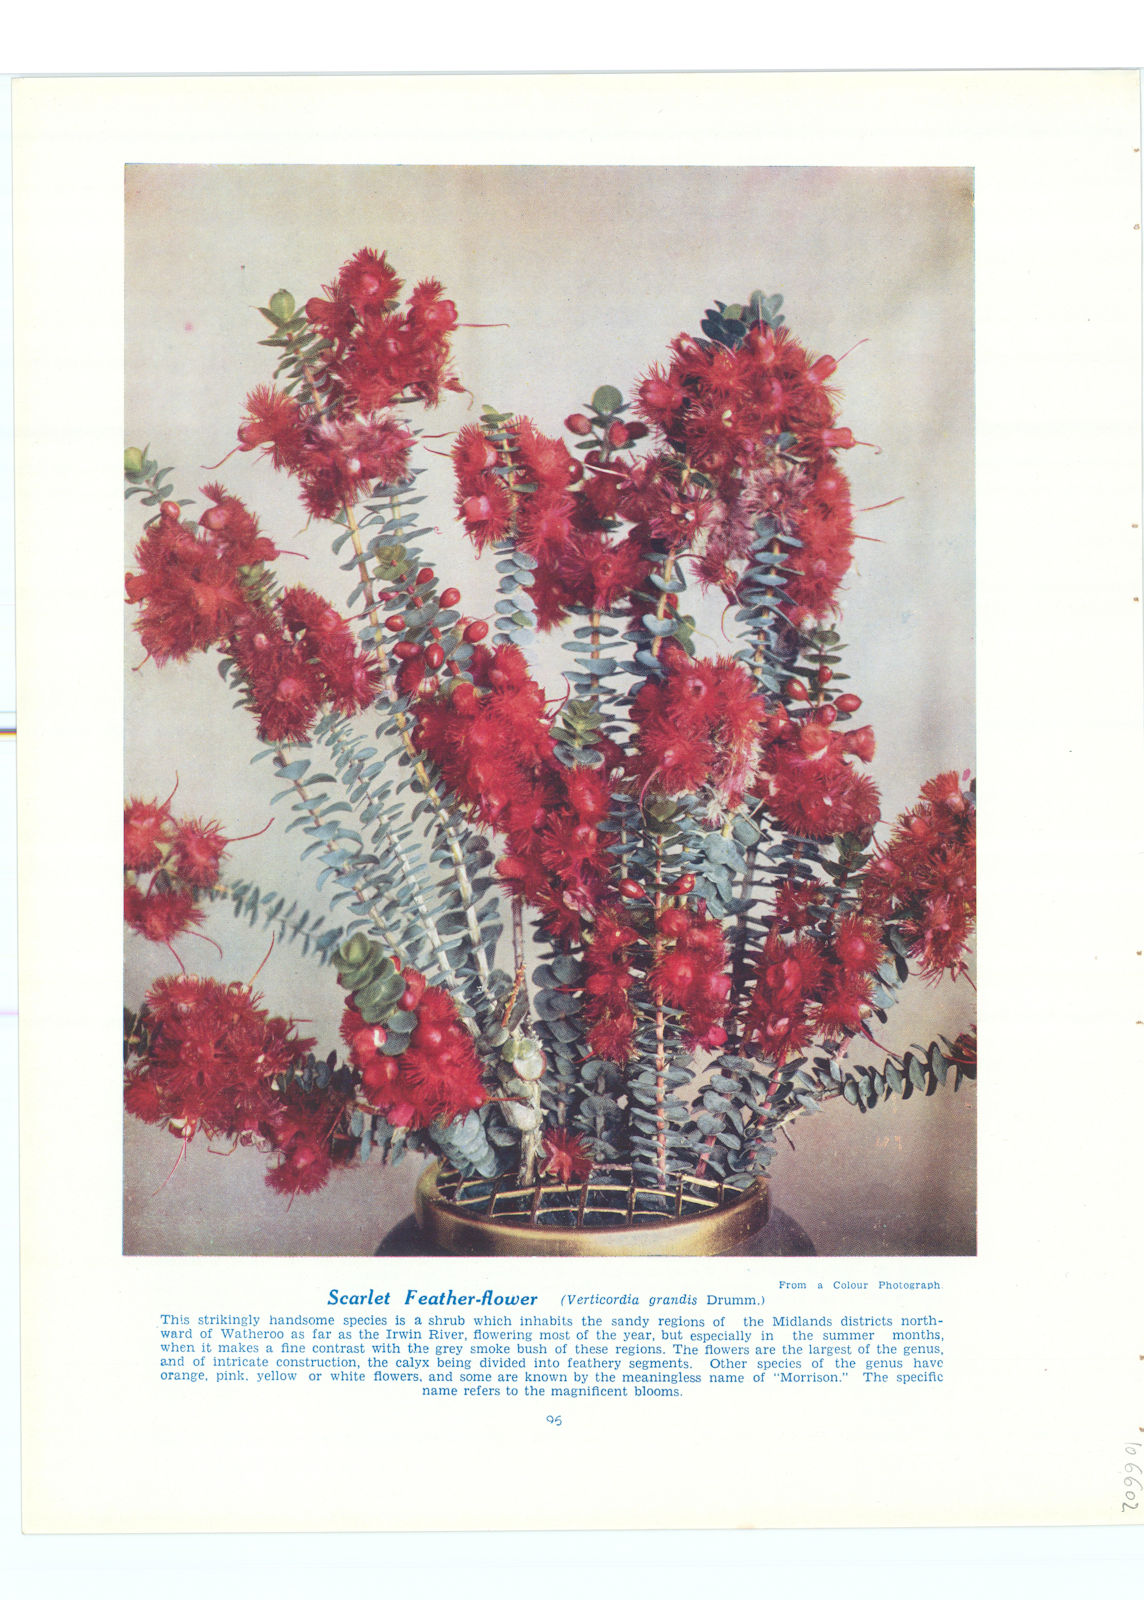 Scarlet Feather-flower (Verticordia grandis). West Australian Wild Flowers 1950